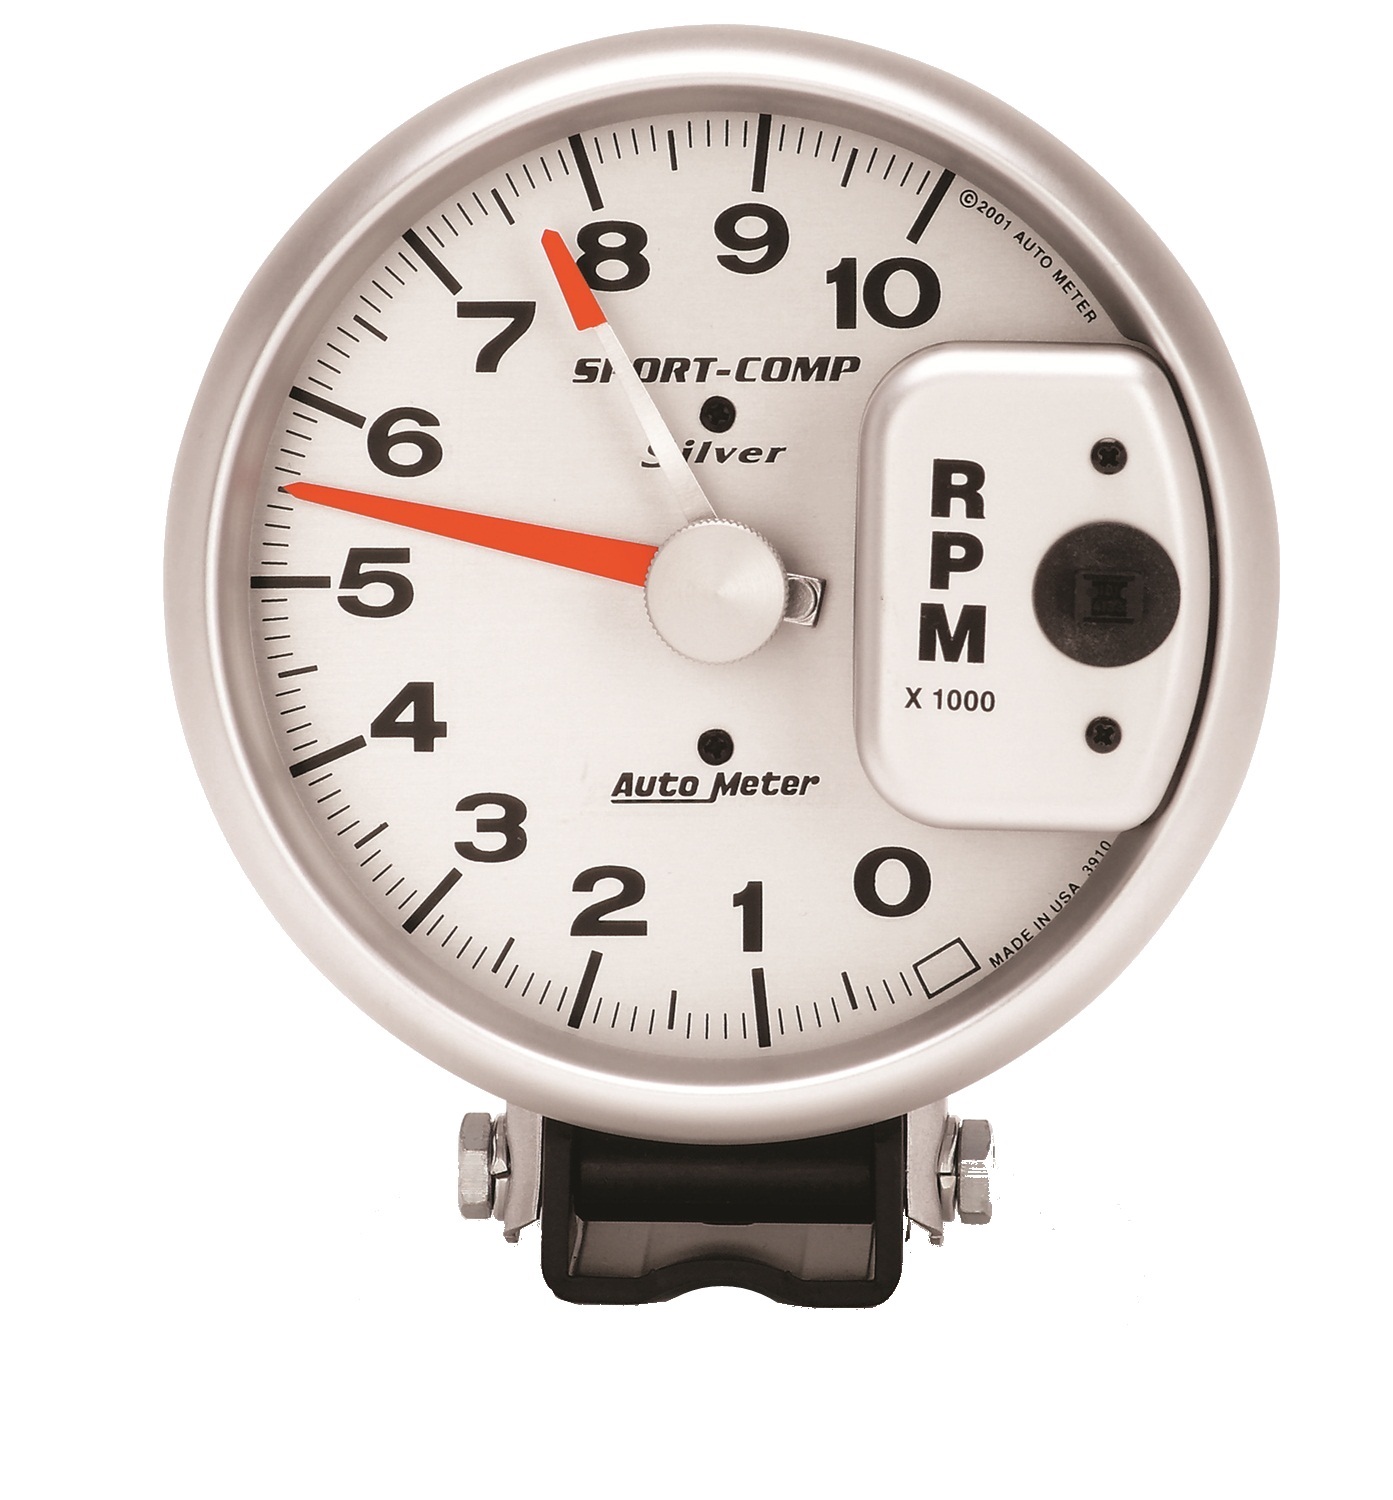 Auto Meter Auto Meter 3910 Sport-Comp Silver; Tachometer